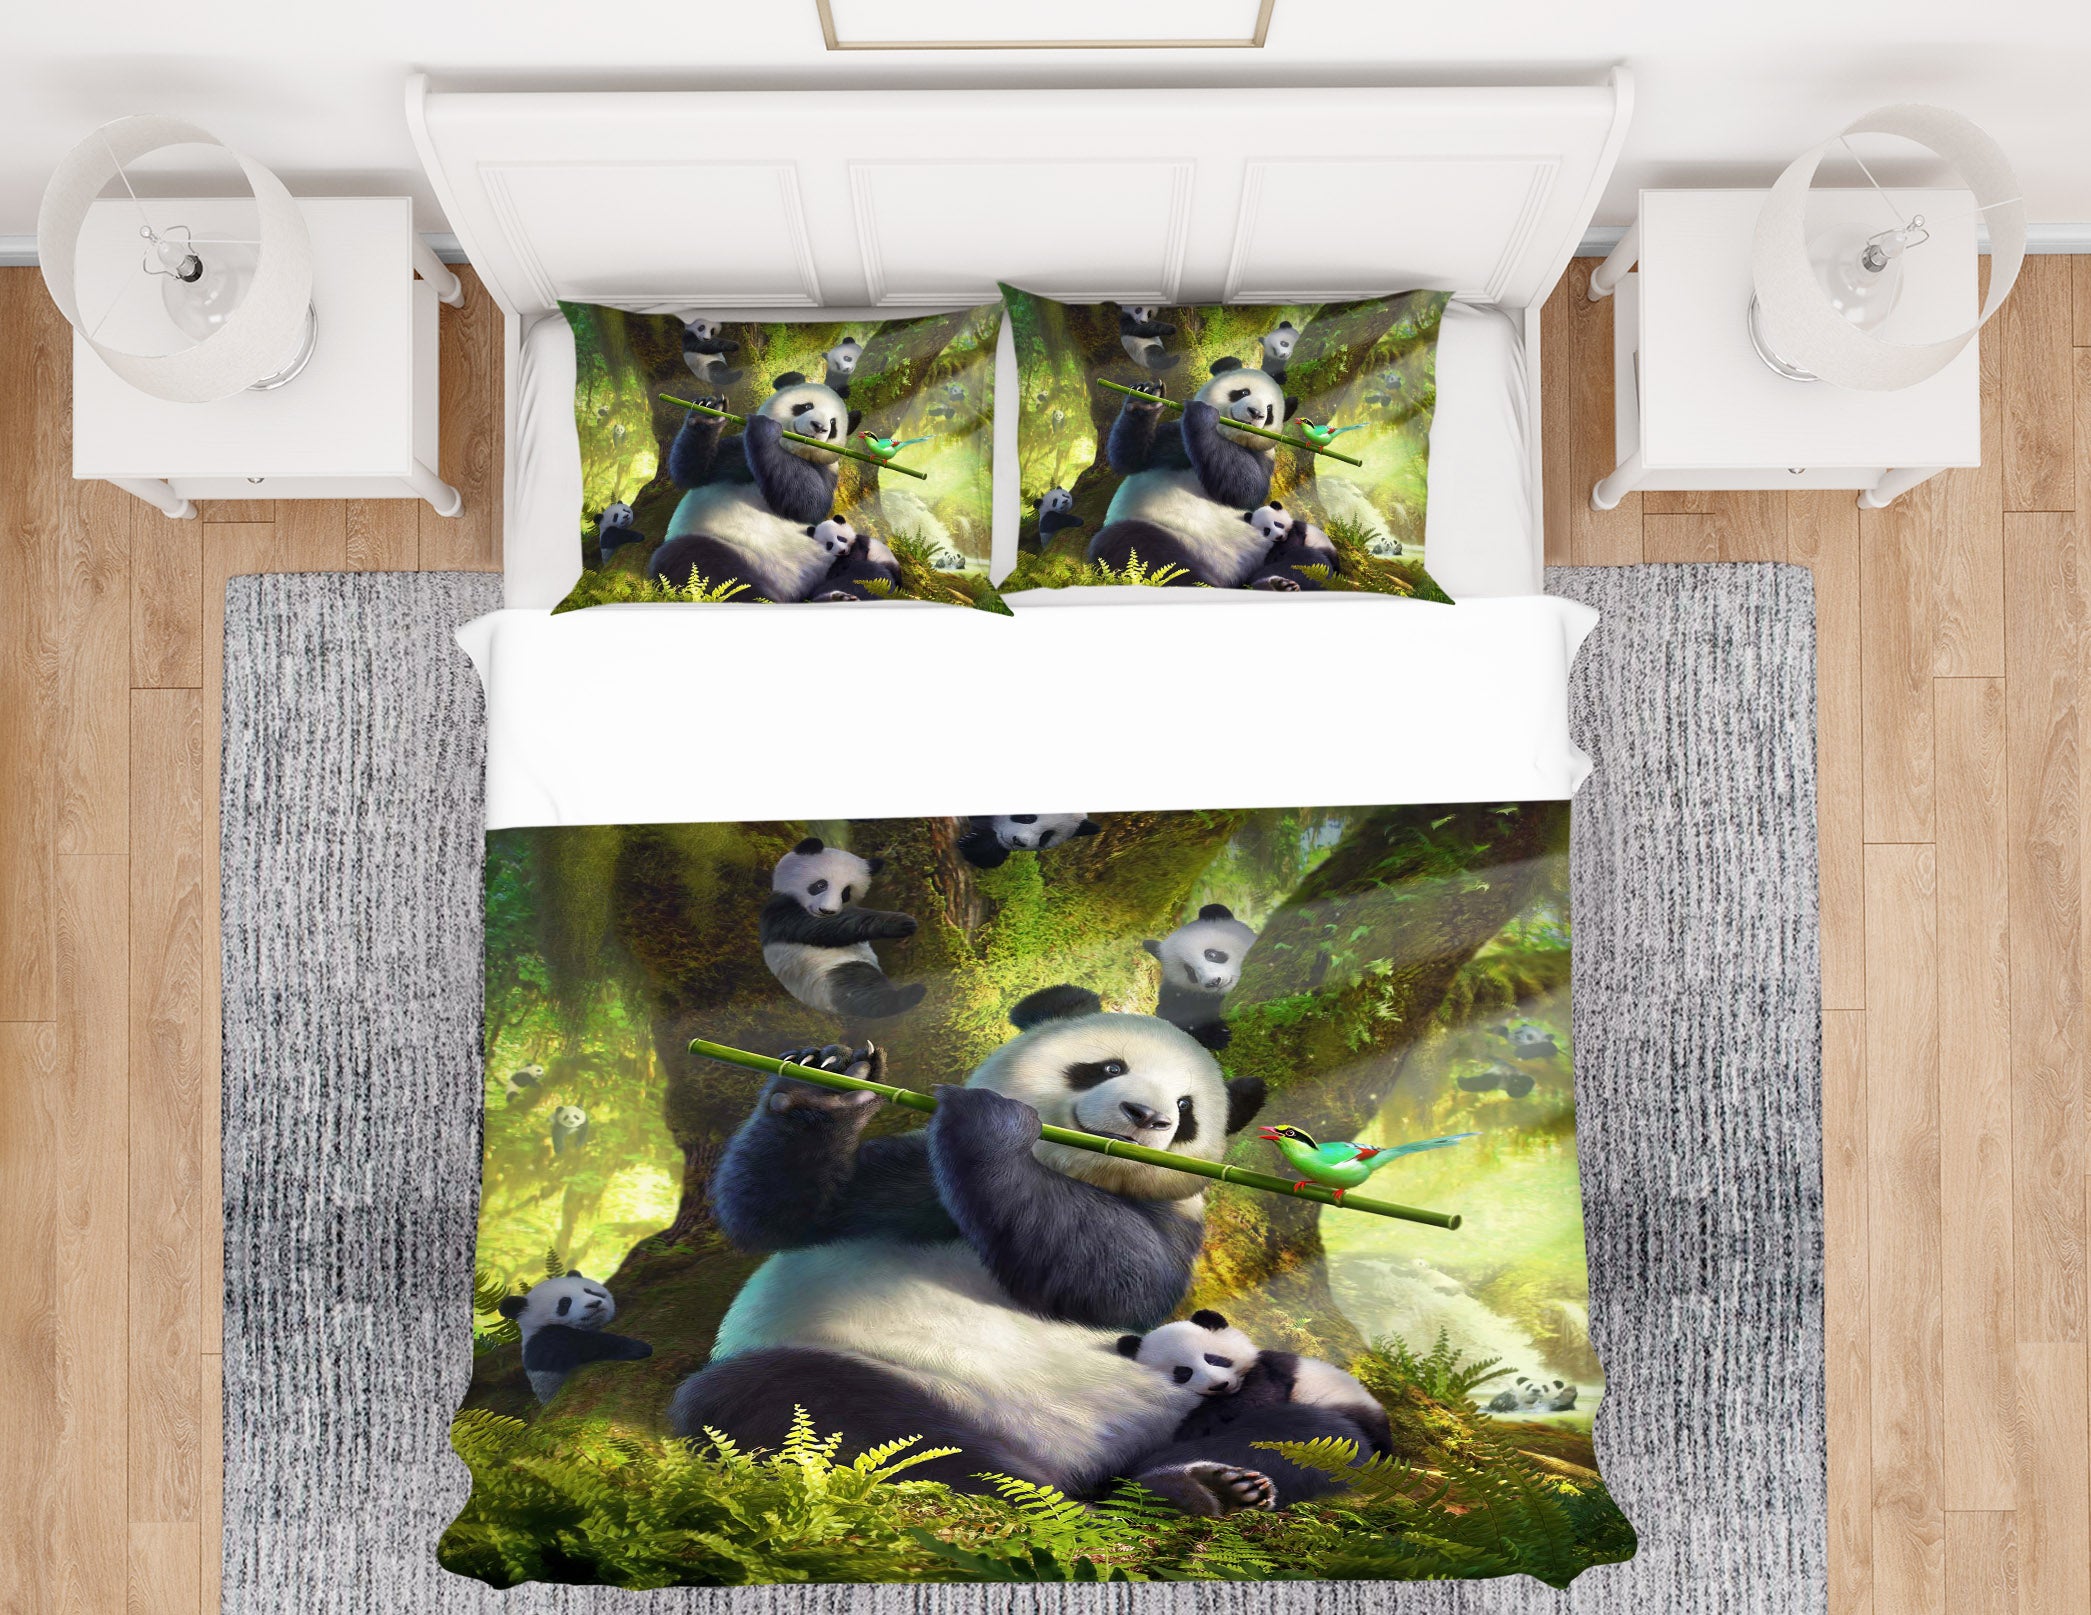 3D Panda Bear 2129 Jerry LoFaro bedding Bed Pillowcases Quilt